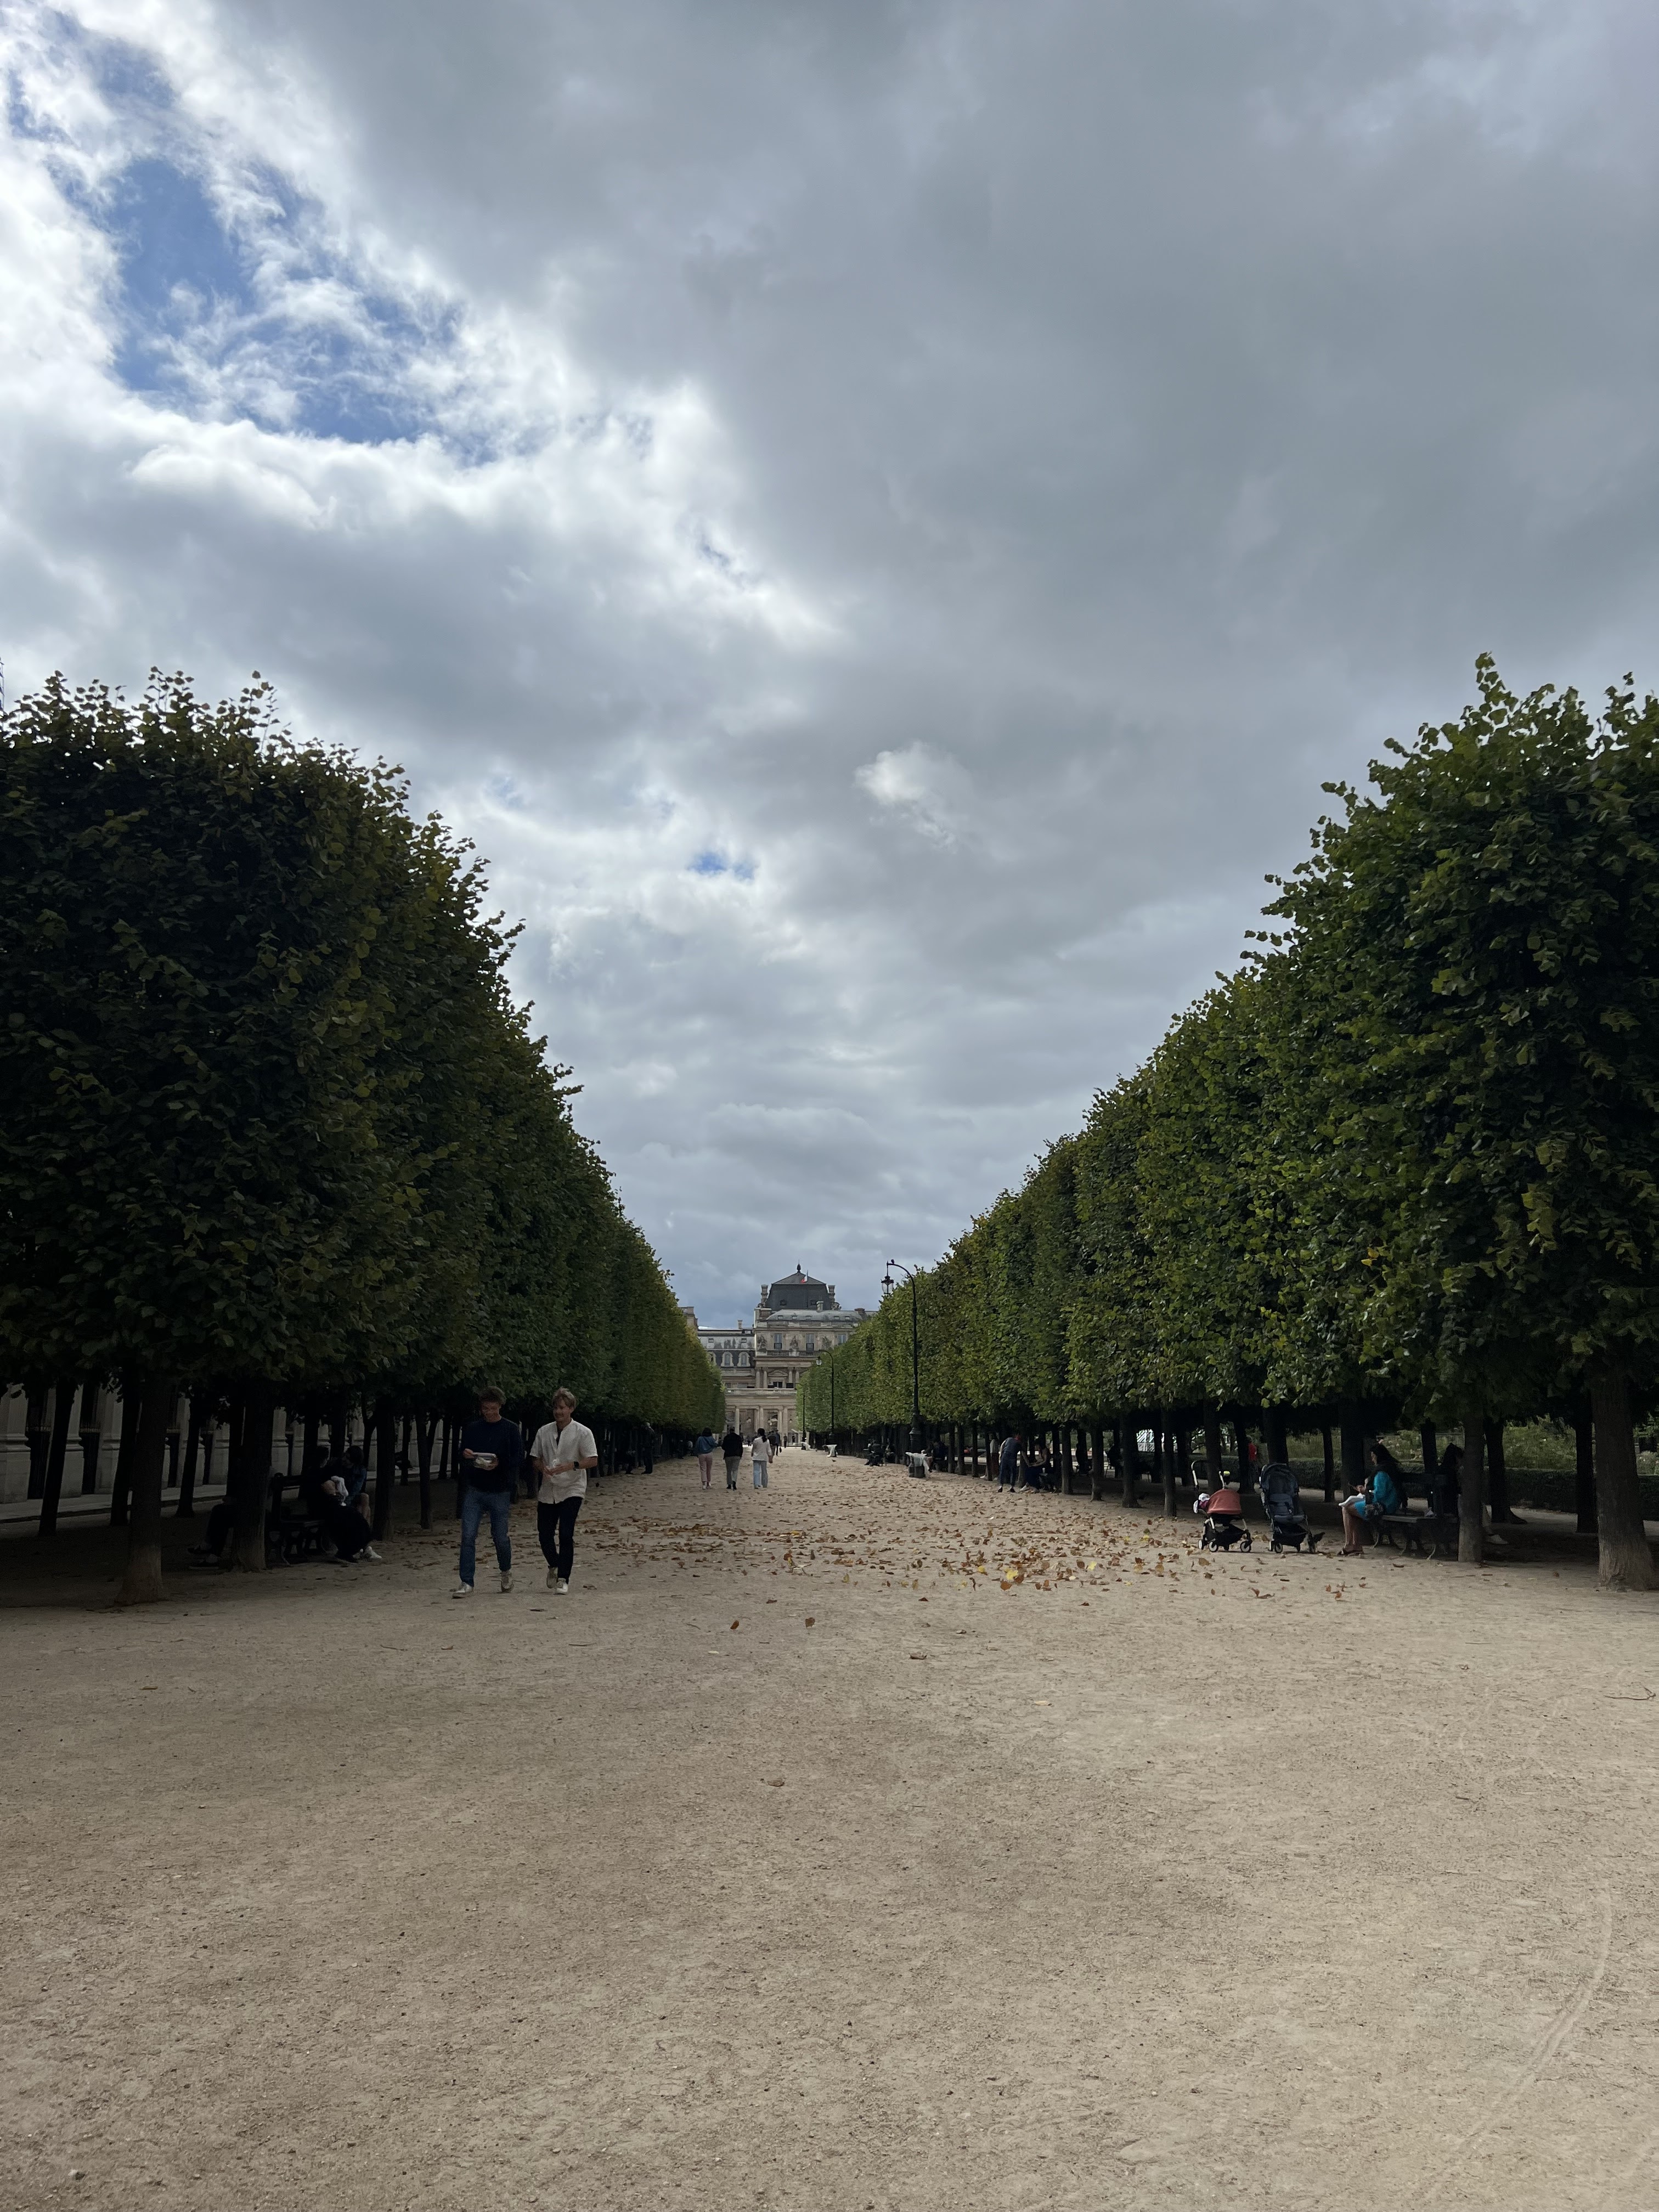 paris travel guide, free things to do in paris, paris parks, paris garden